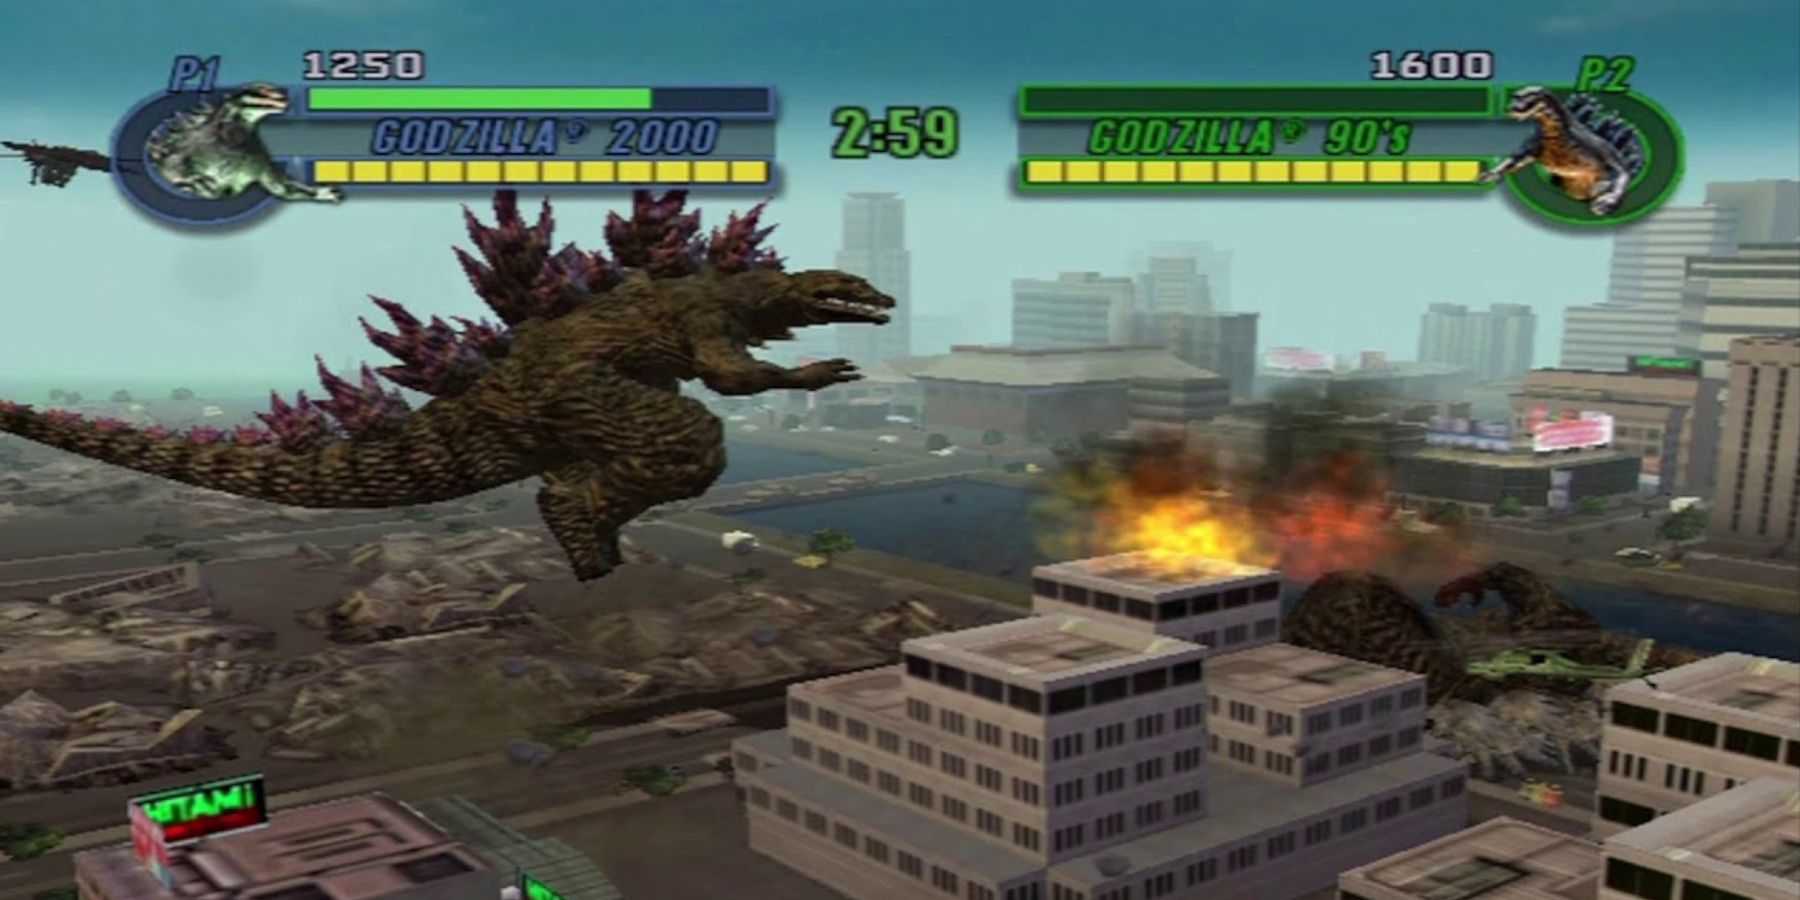 Godzilla Save the Earth Godzilla 90s v Godzilla 2000